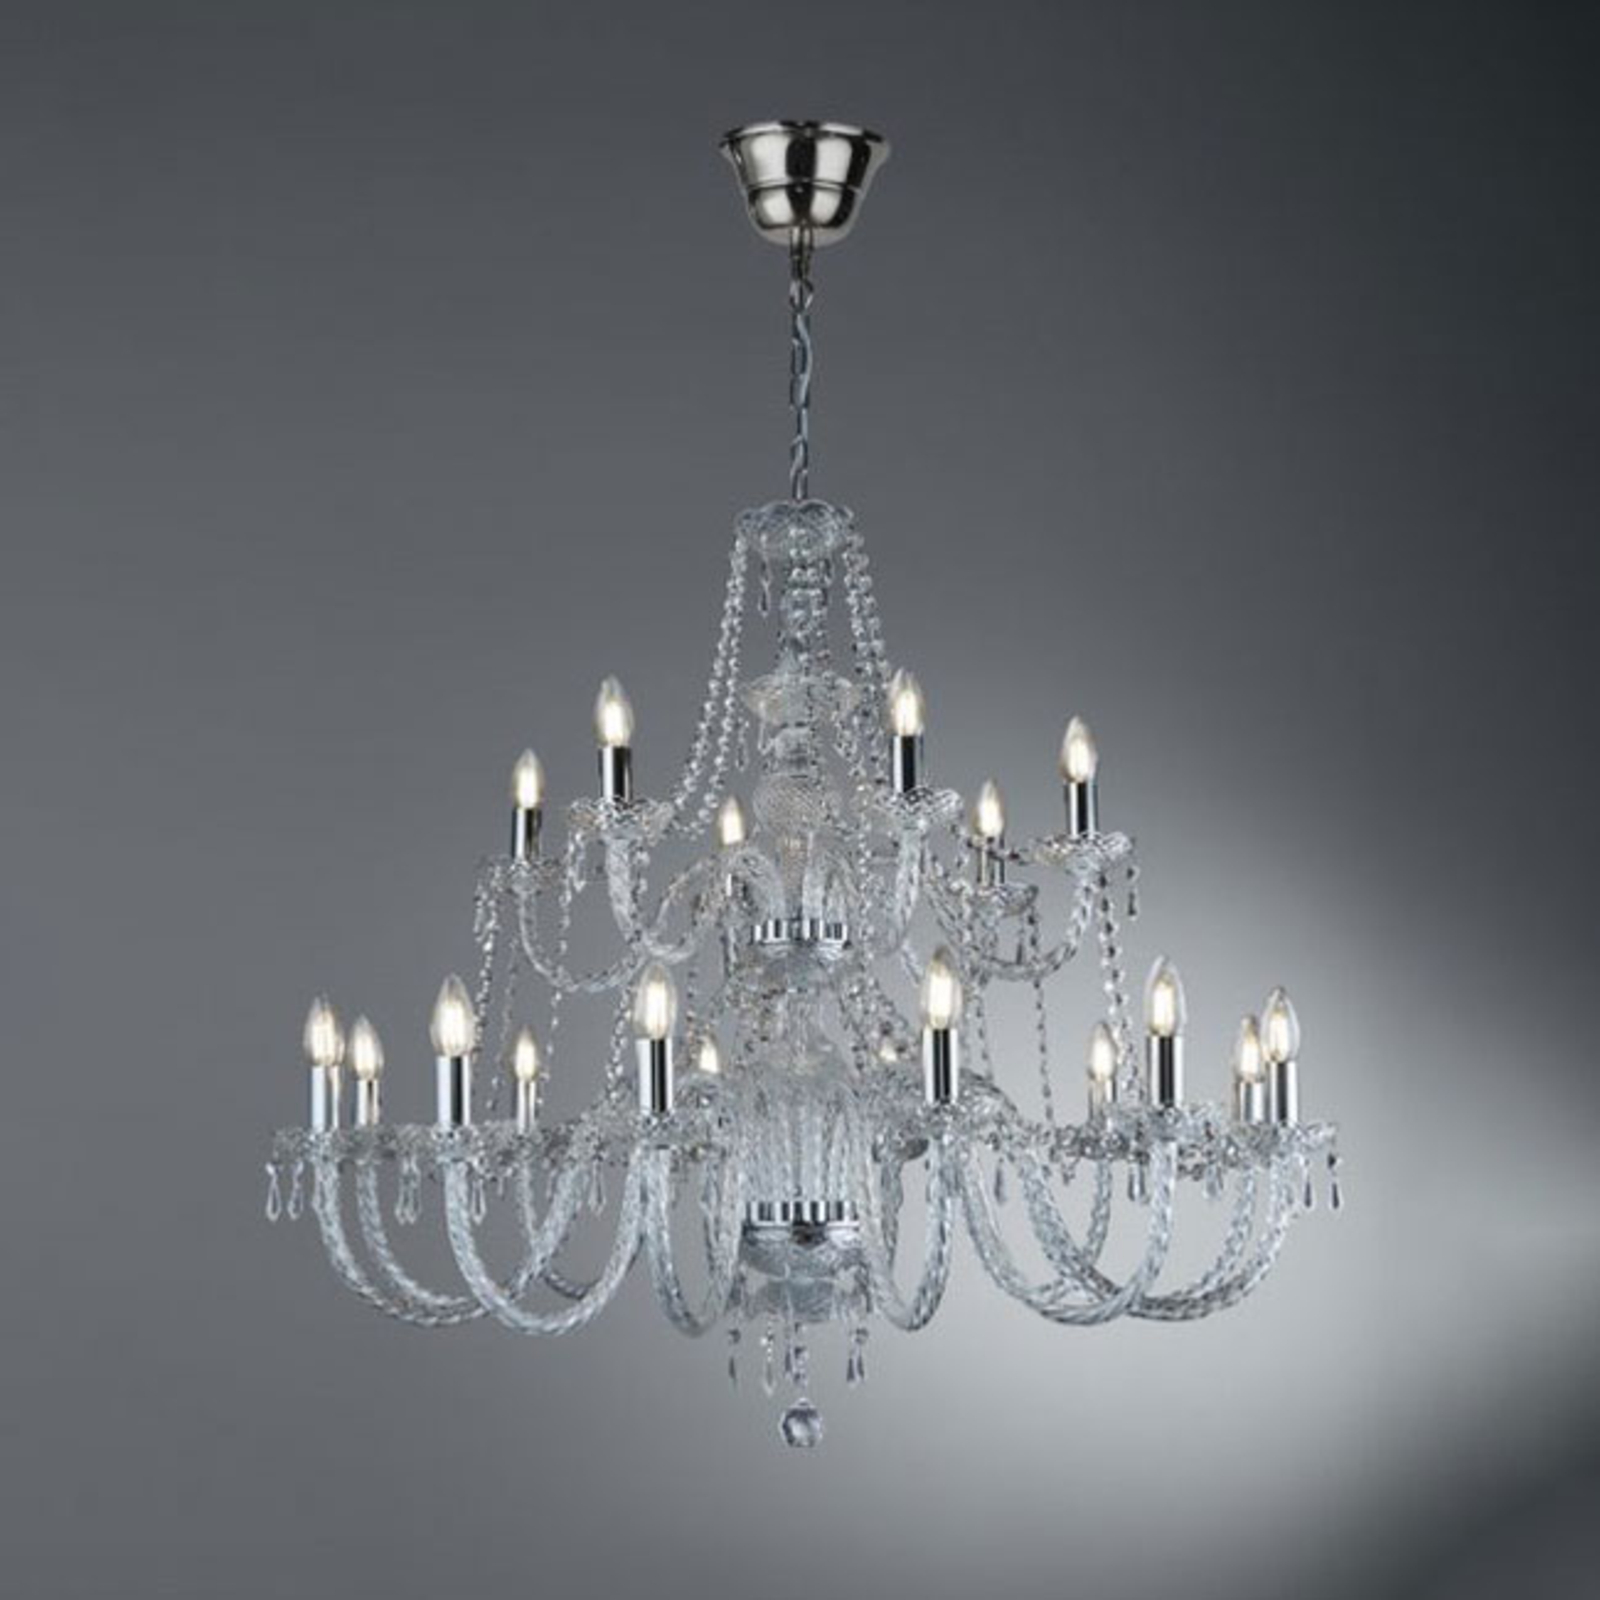 18-bulb Hale crystal chandelier